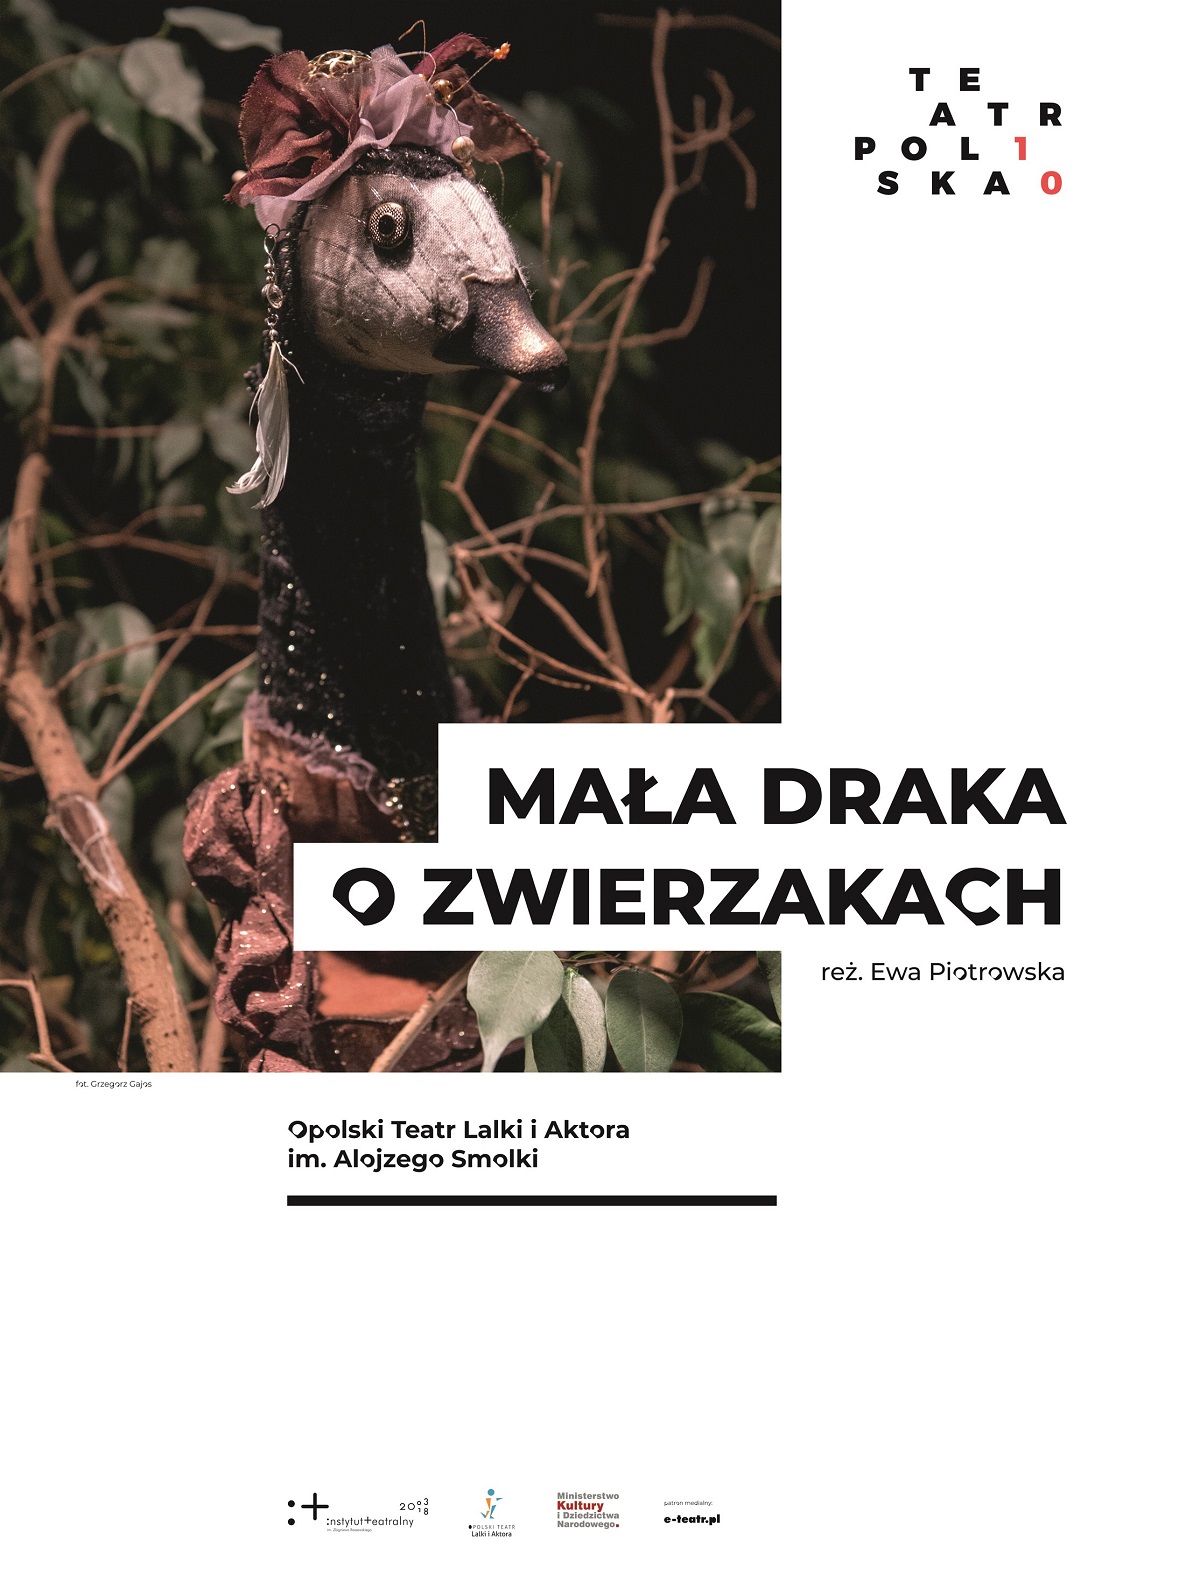 Projekt „Teatr Polska” startuje w Opolu